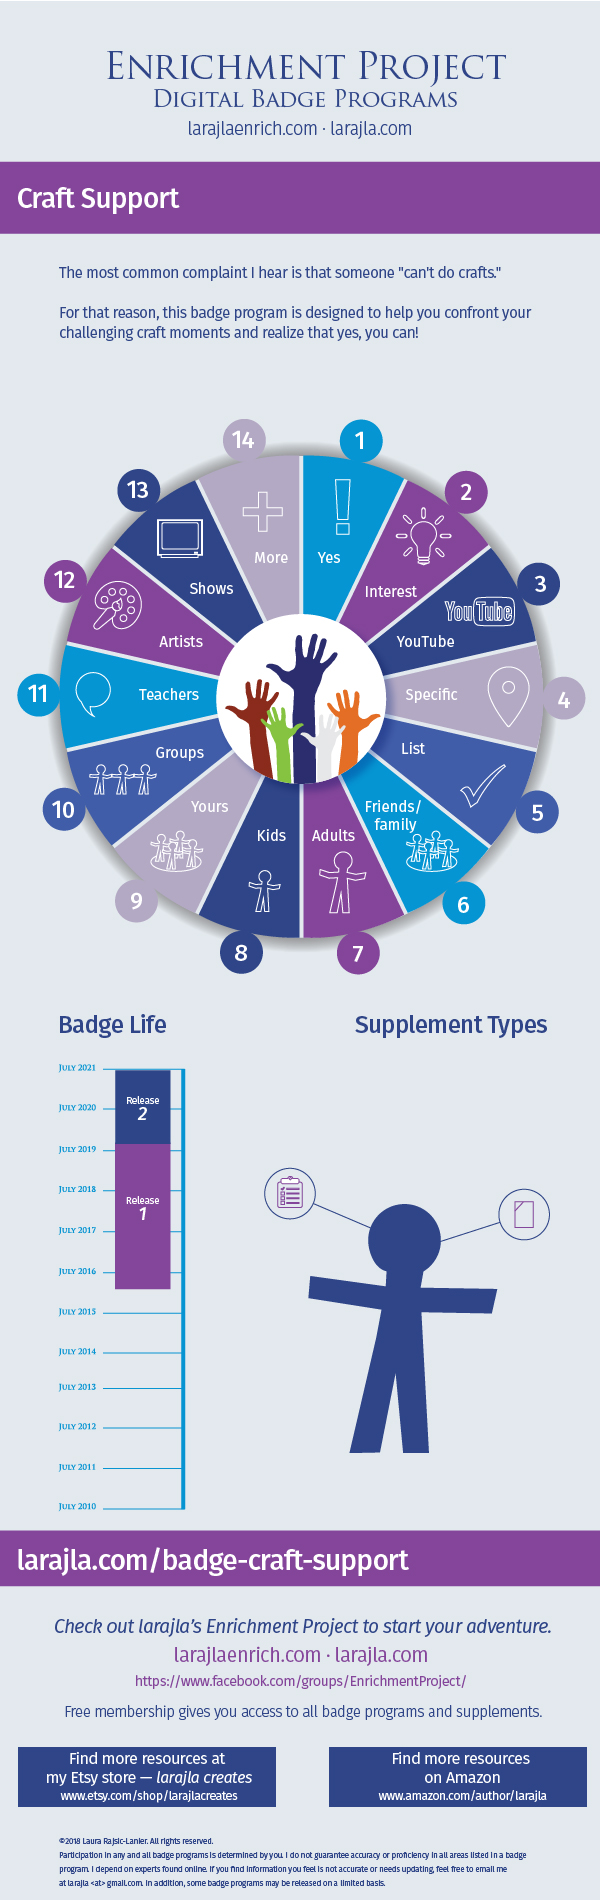 Infographic: Craft Support Badge Program
Enrichment Project
larajla.com